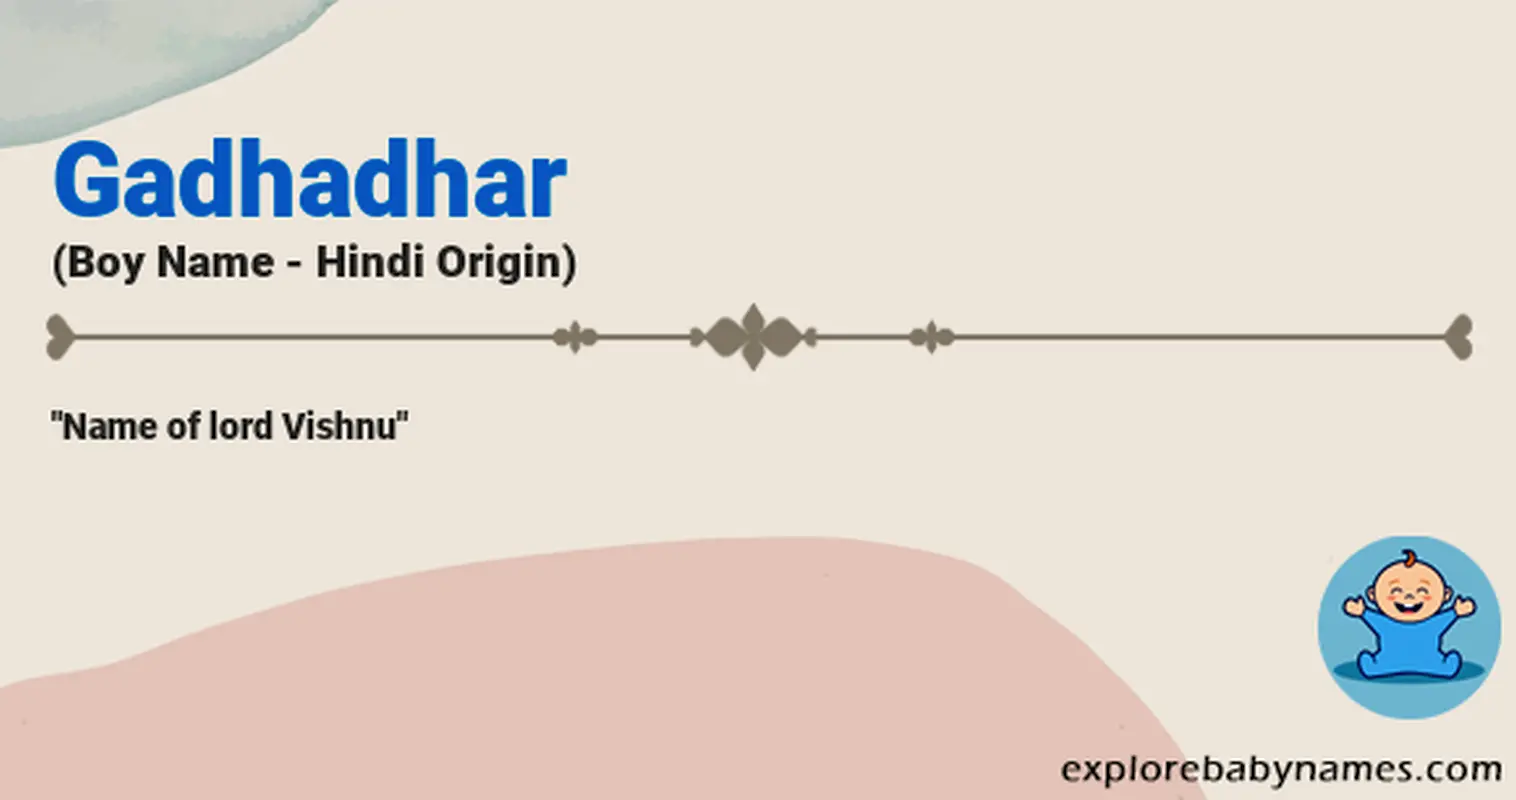 Meaning of Gadhadhar